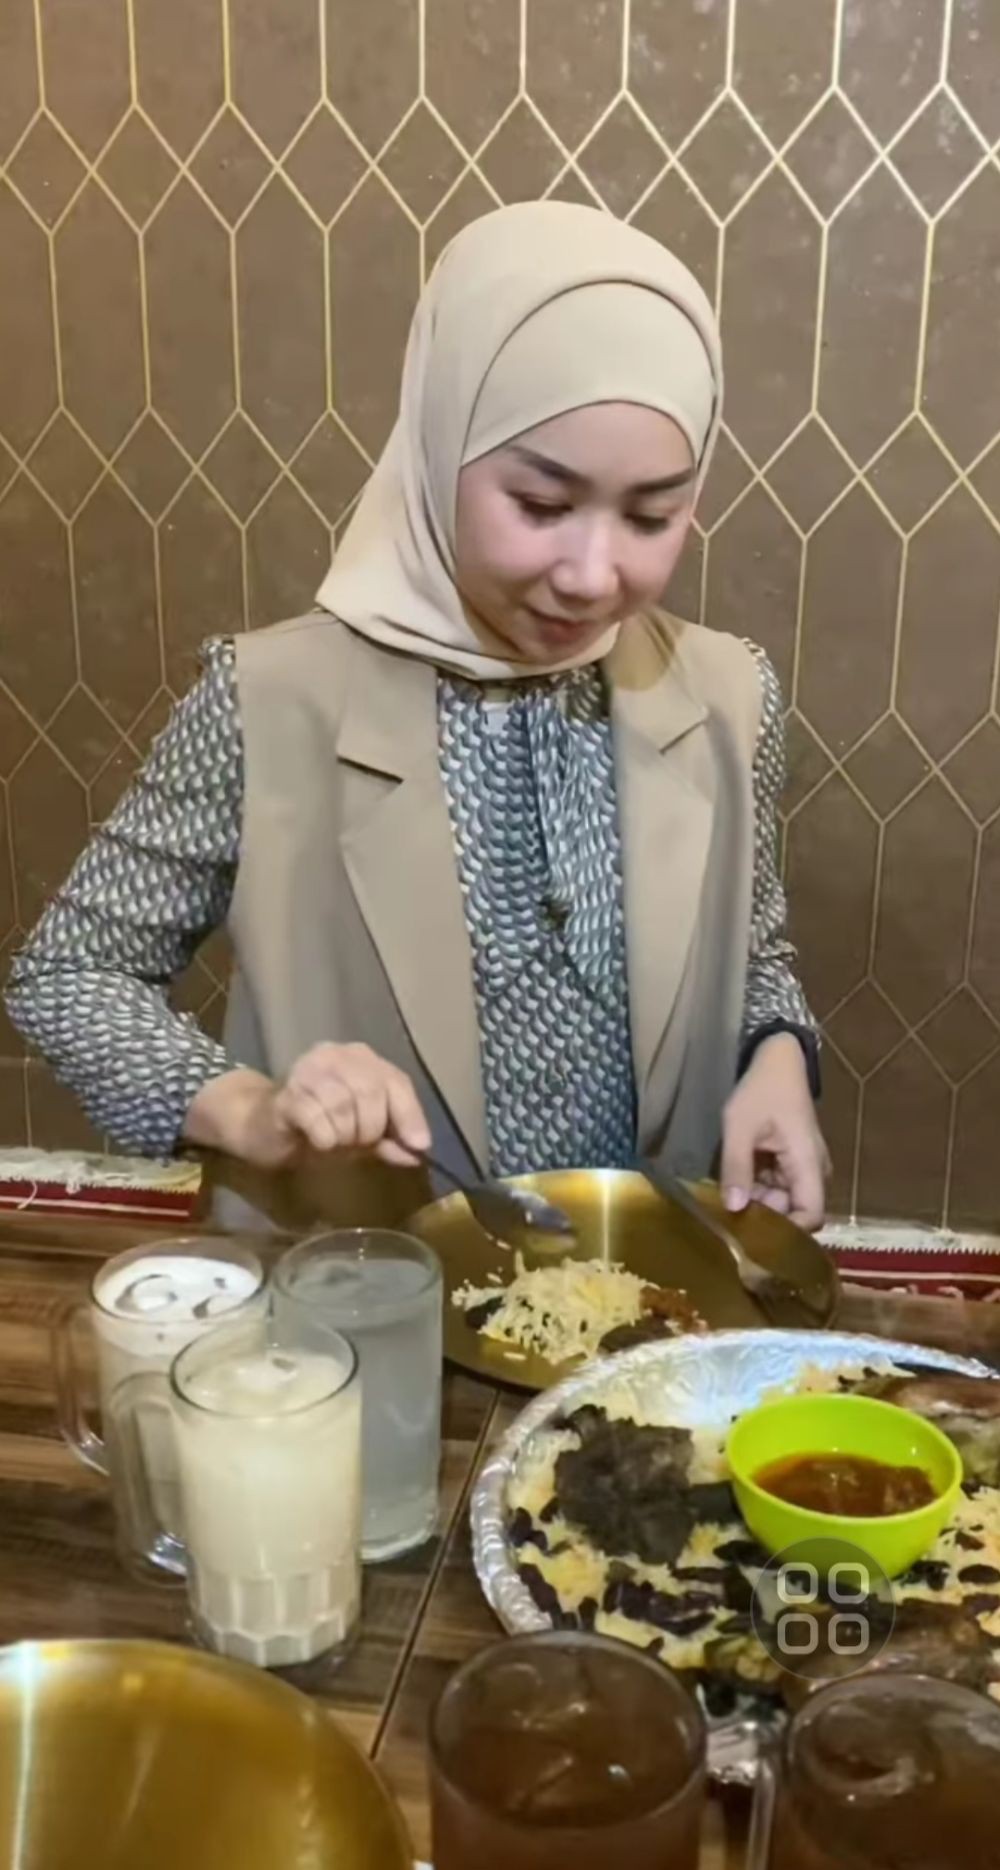 Rekomendasi Tempat Makan Keluarga di Kota Metro Khas Masakan Nusantara